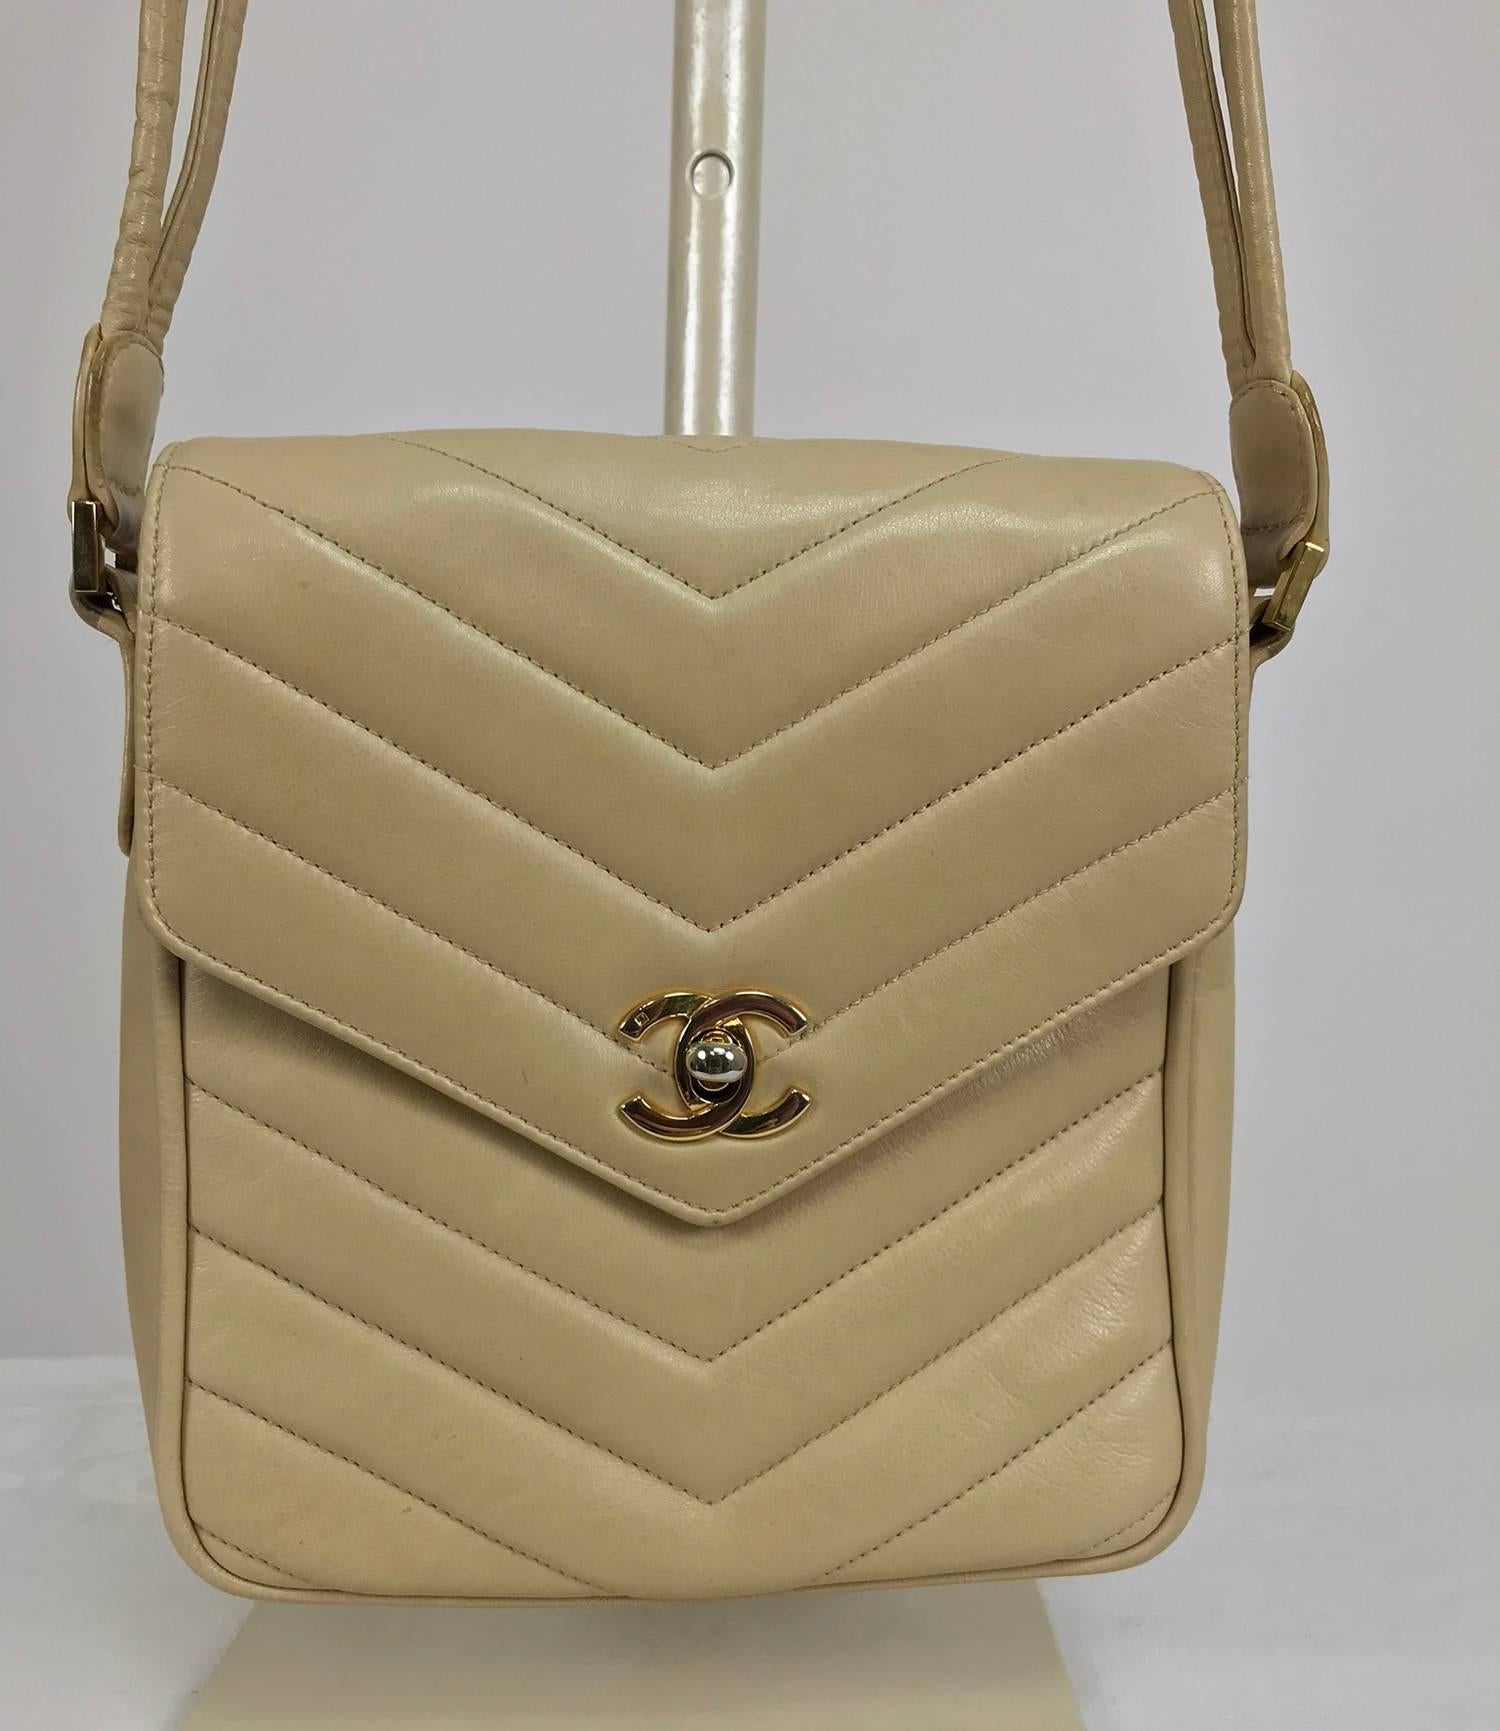 Beige Chanel beige chevron leather cross body camera handbag 1980s